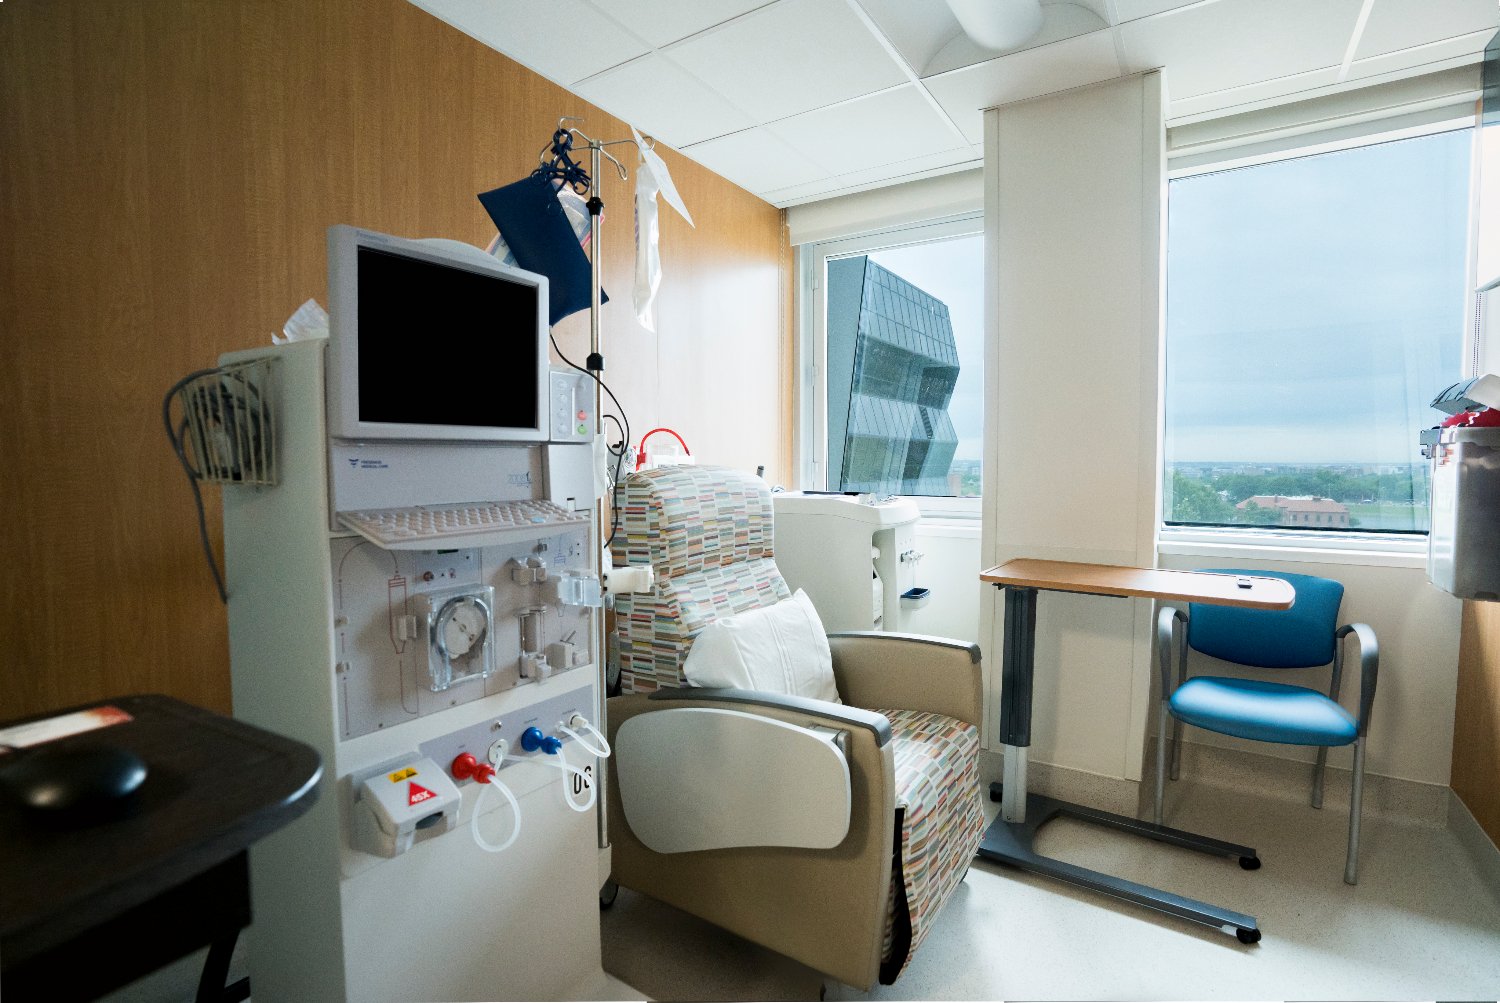 Dialysis clinic equipment